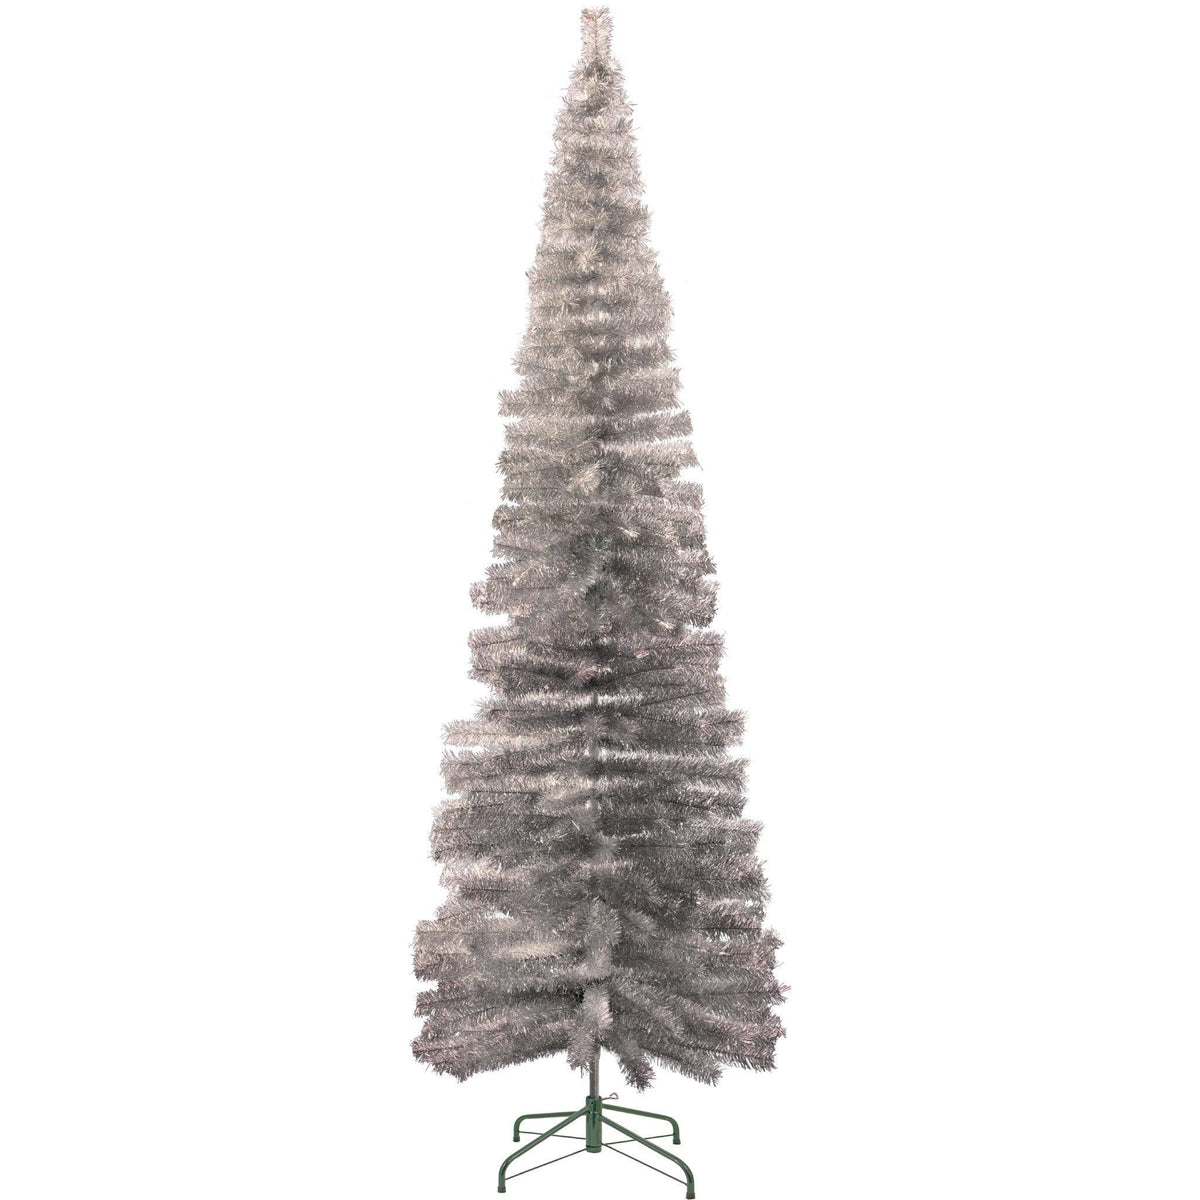 Lee Display's 10FT Tall Silver Tinsel Christmas Tree on sale at leedisplay.com